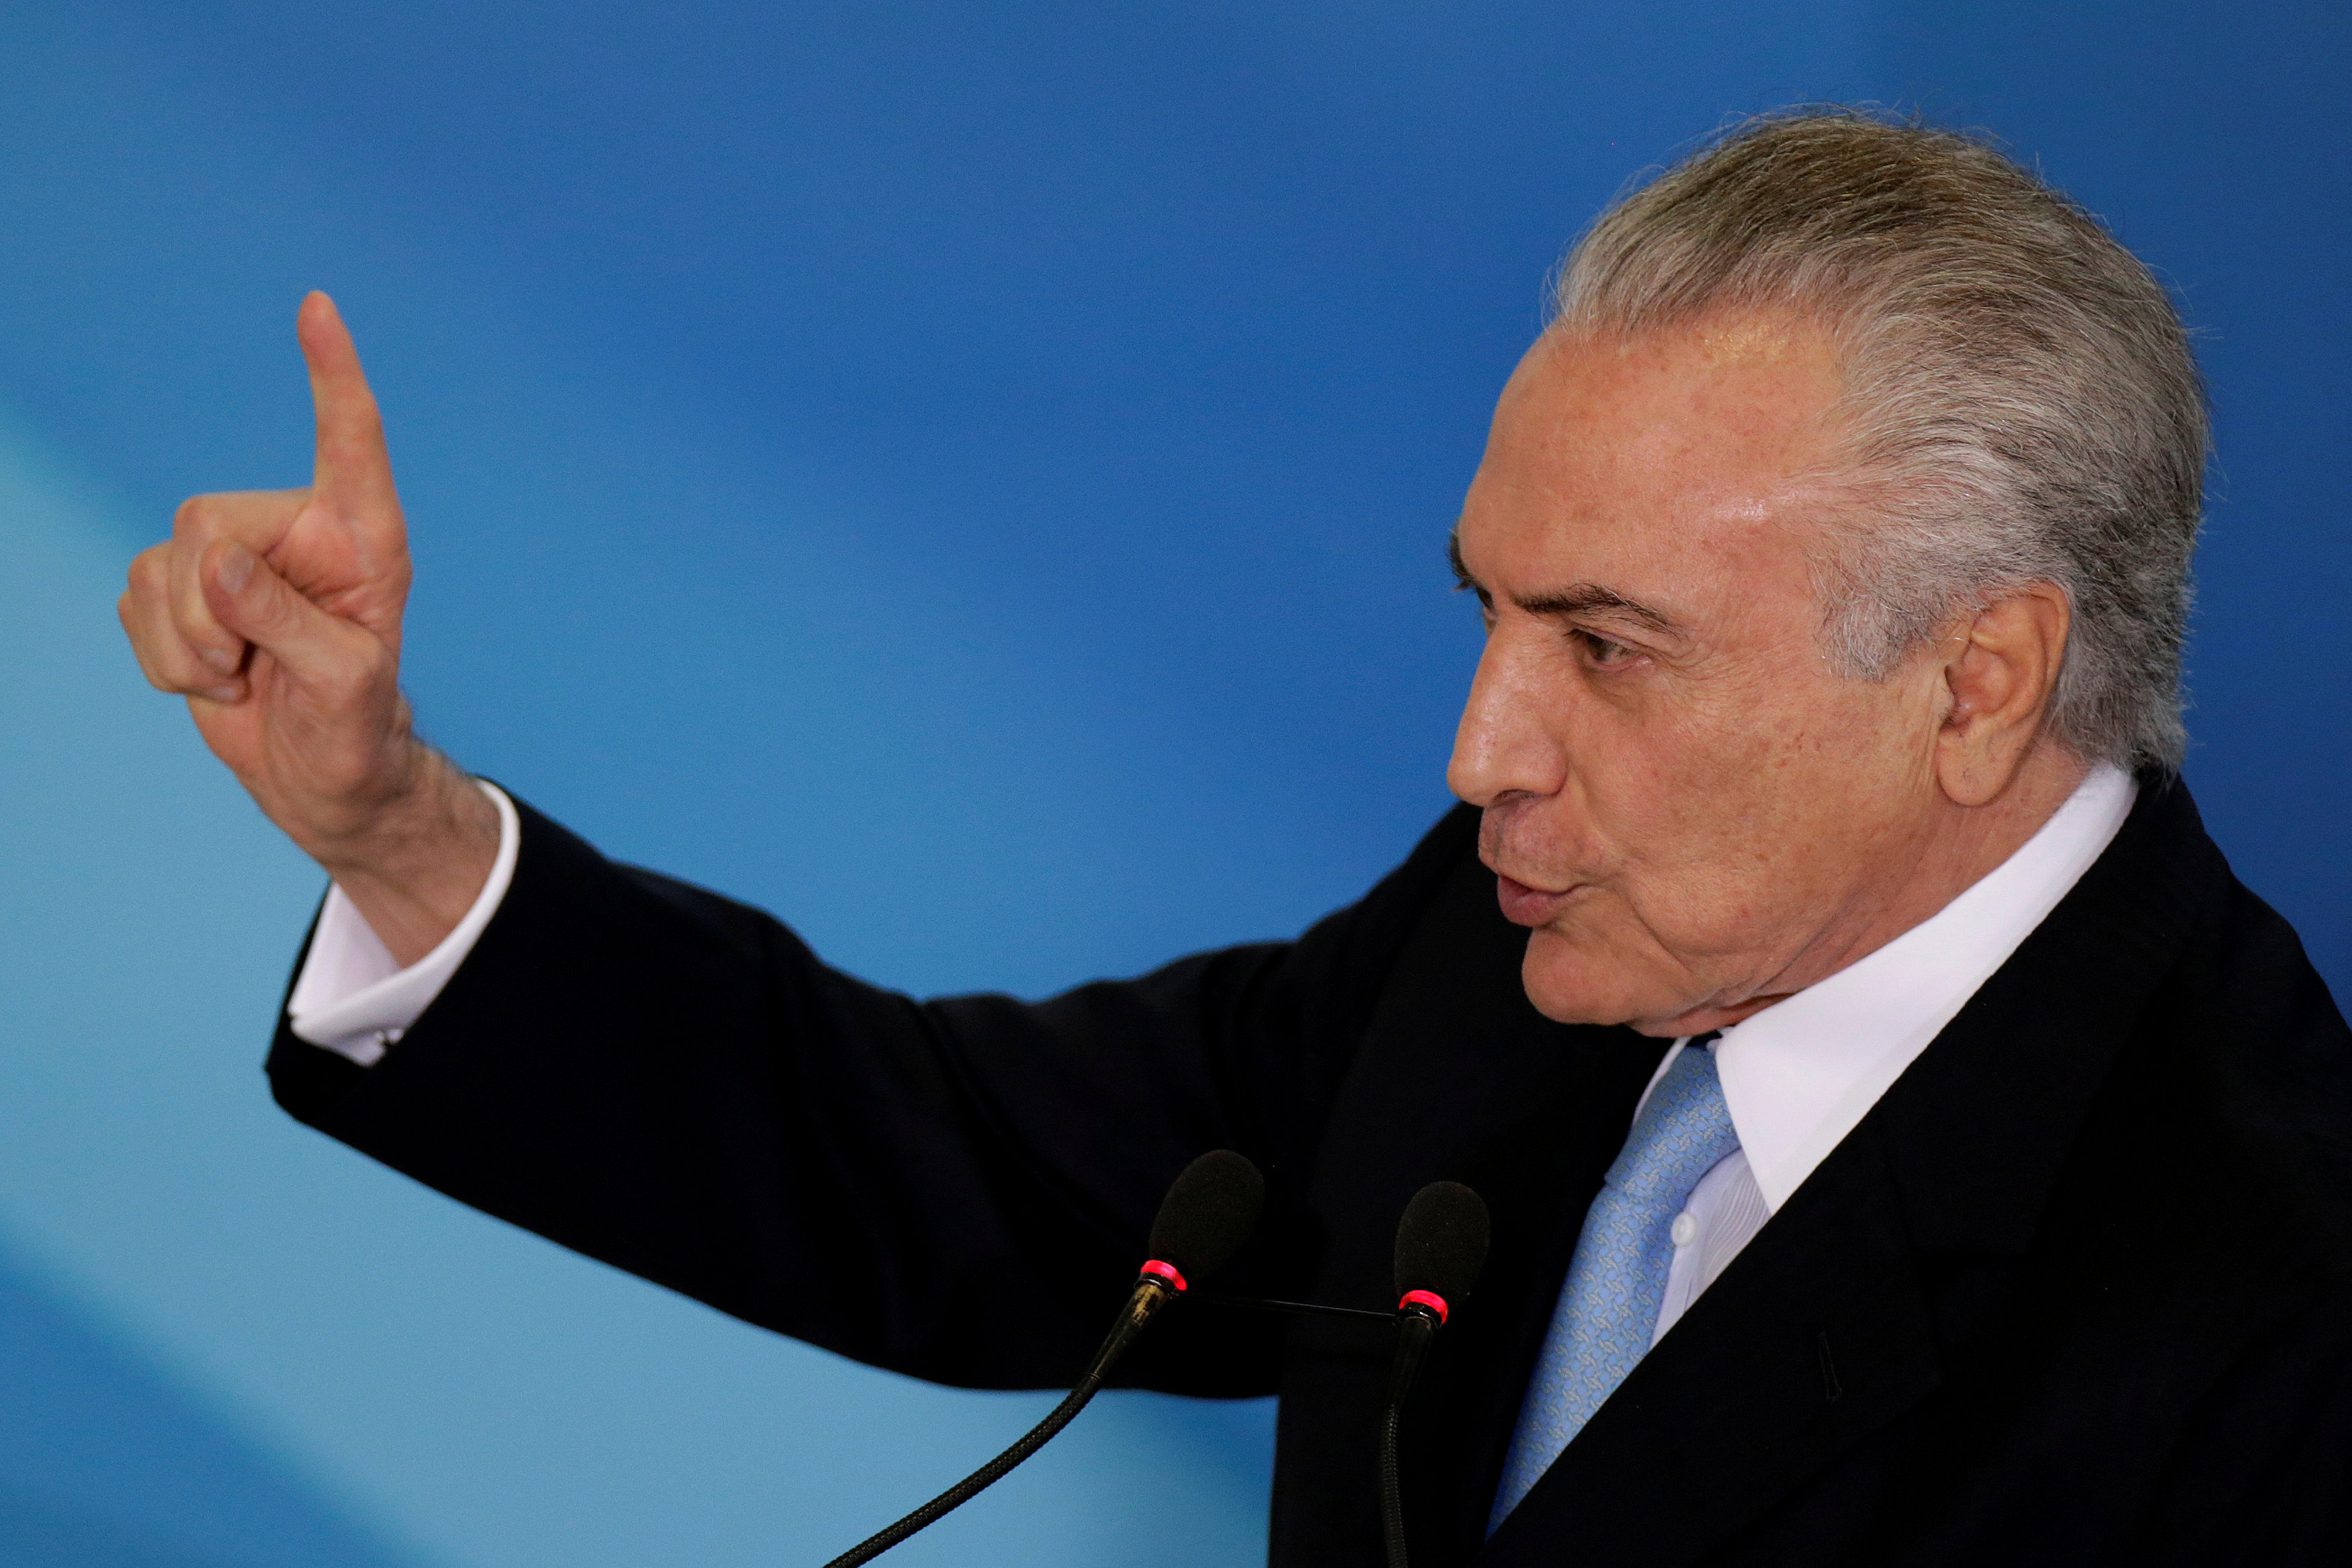 Brazil's Temer to sue billionaire foe over graft accusations